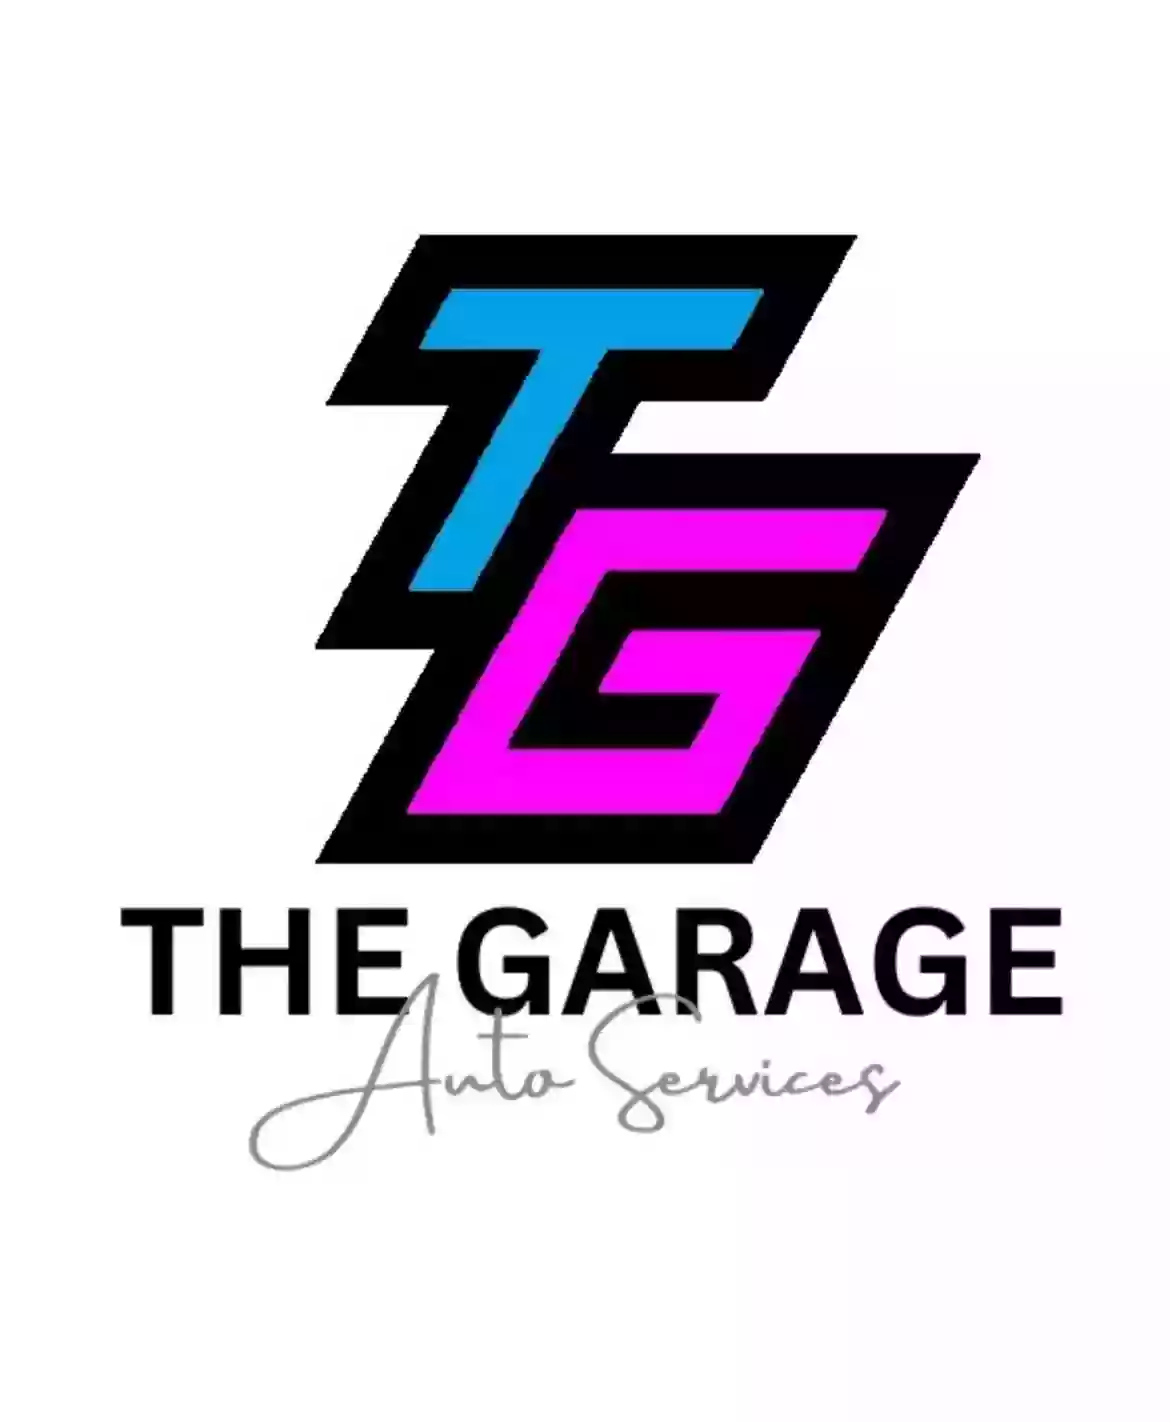 The Garage Auto Services LLC